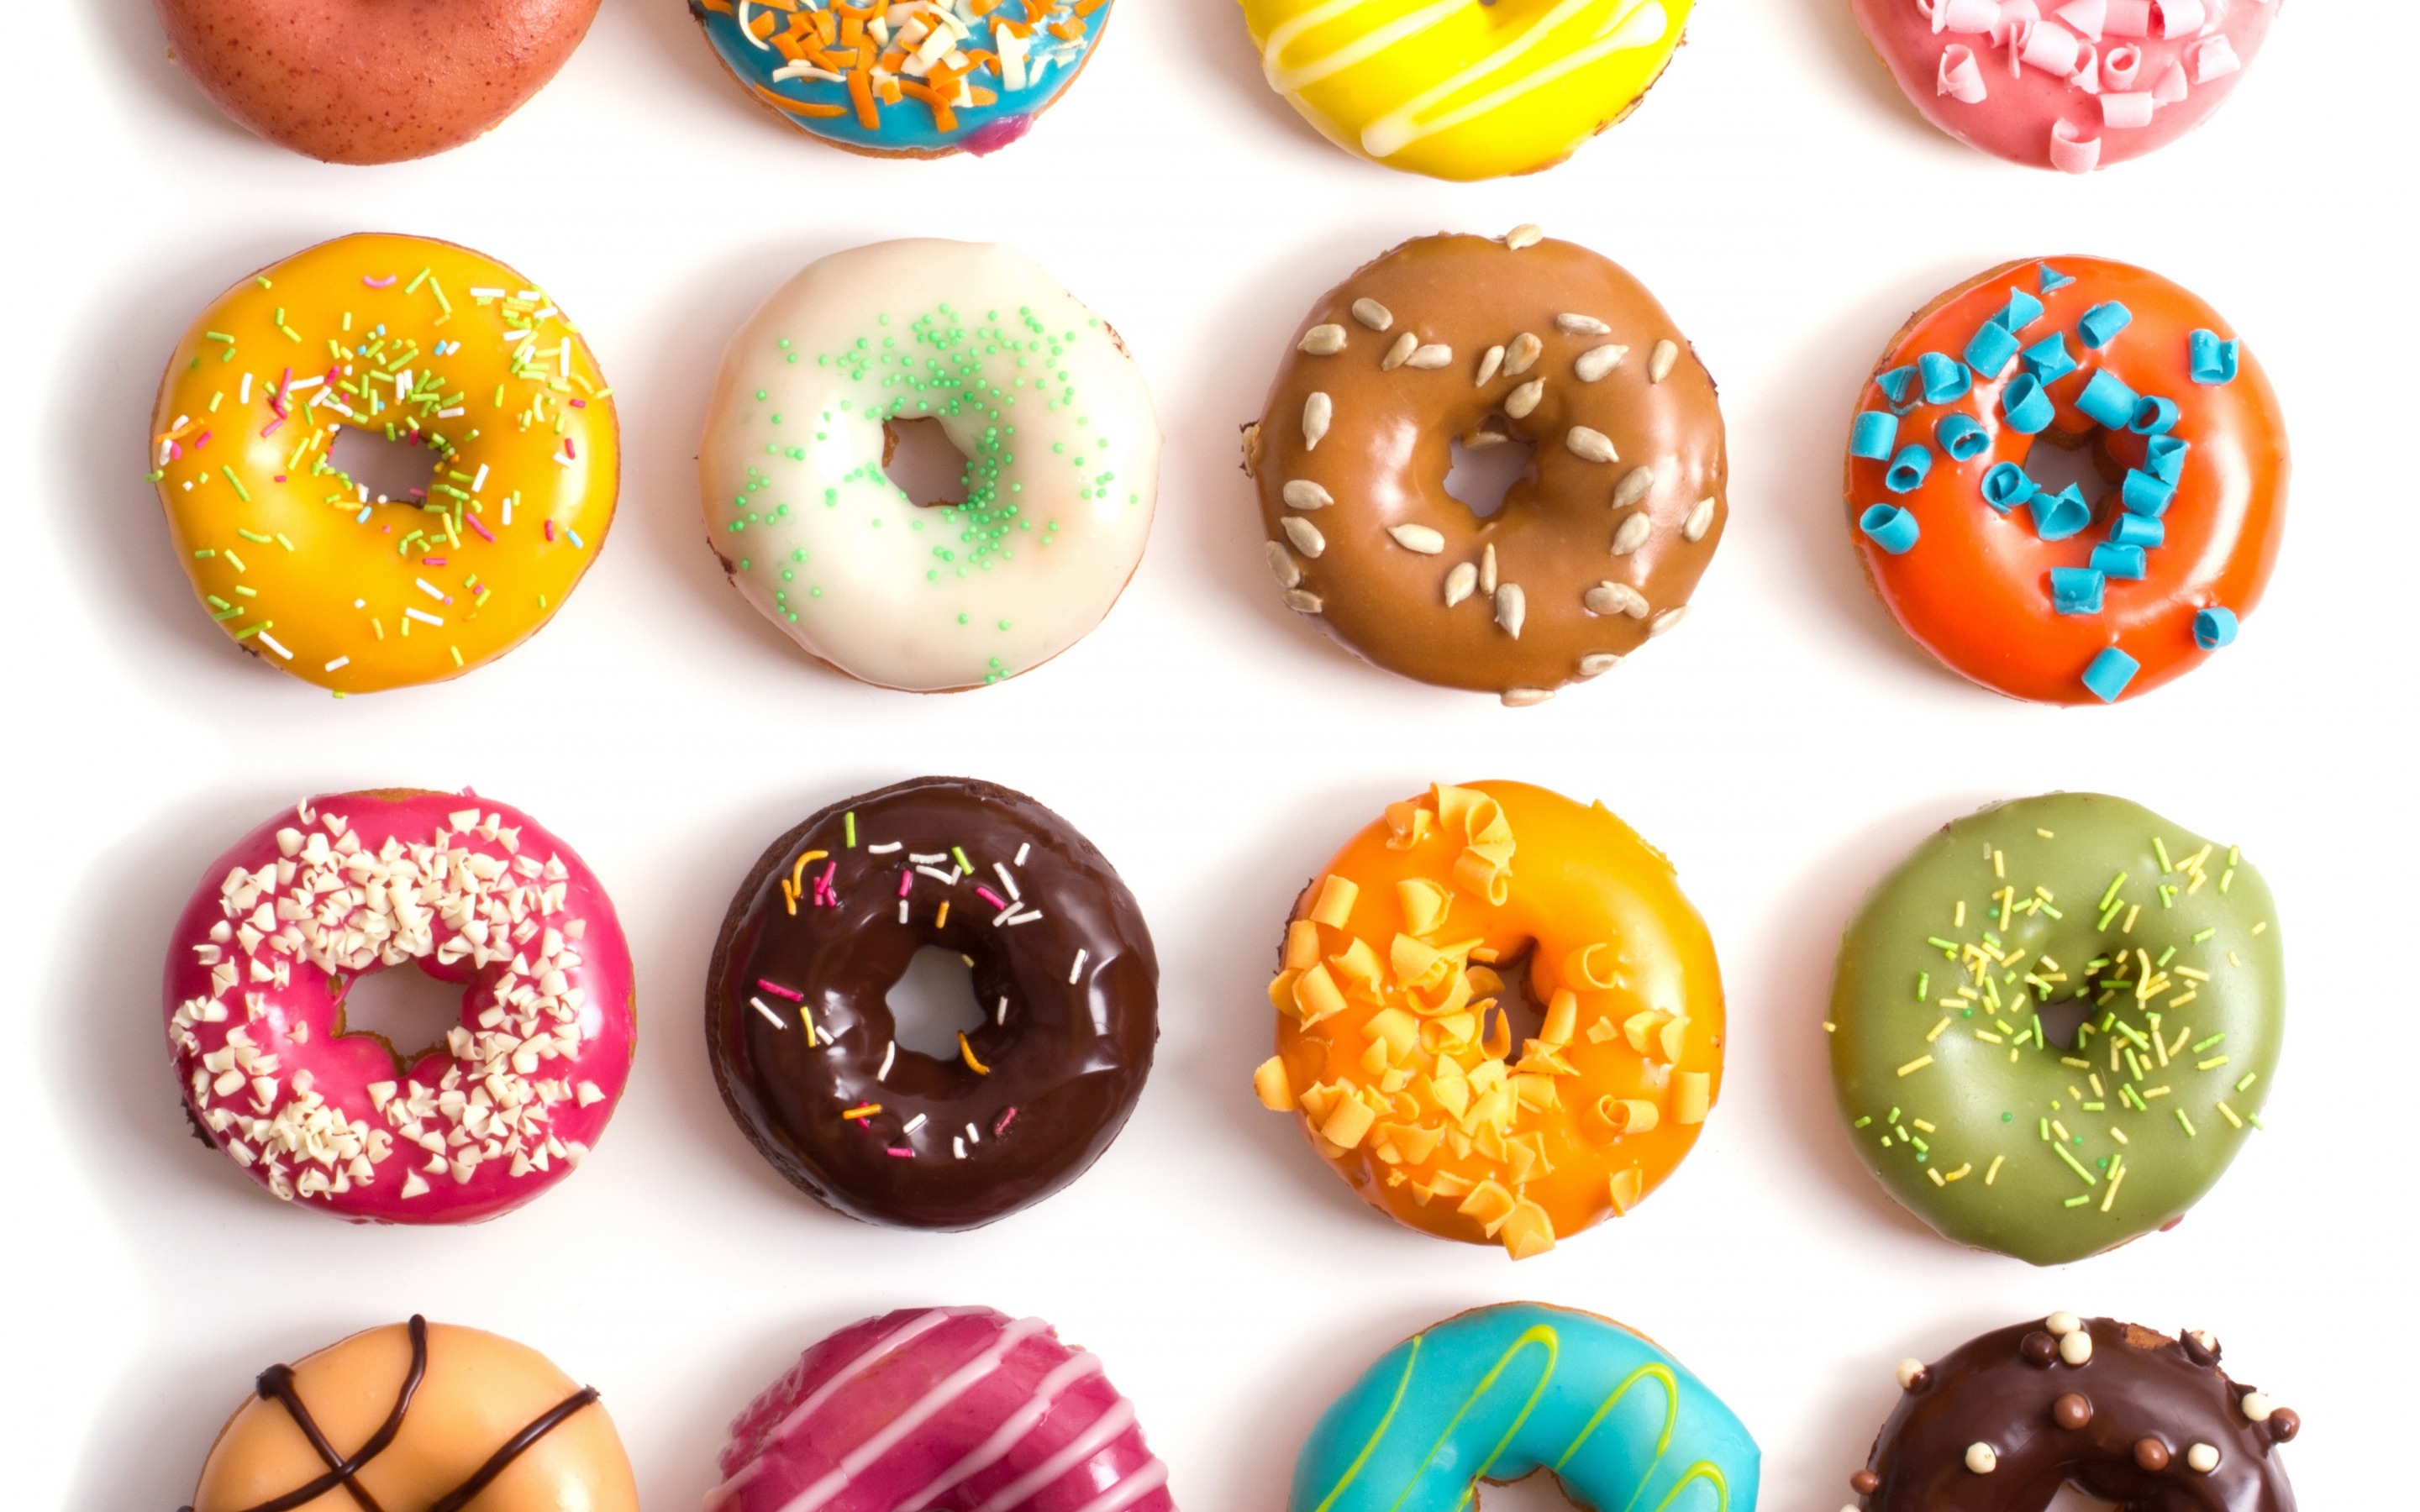 dunkin donuts wallpaper,doughnut,food,ciambella,cuisine,baked goods